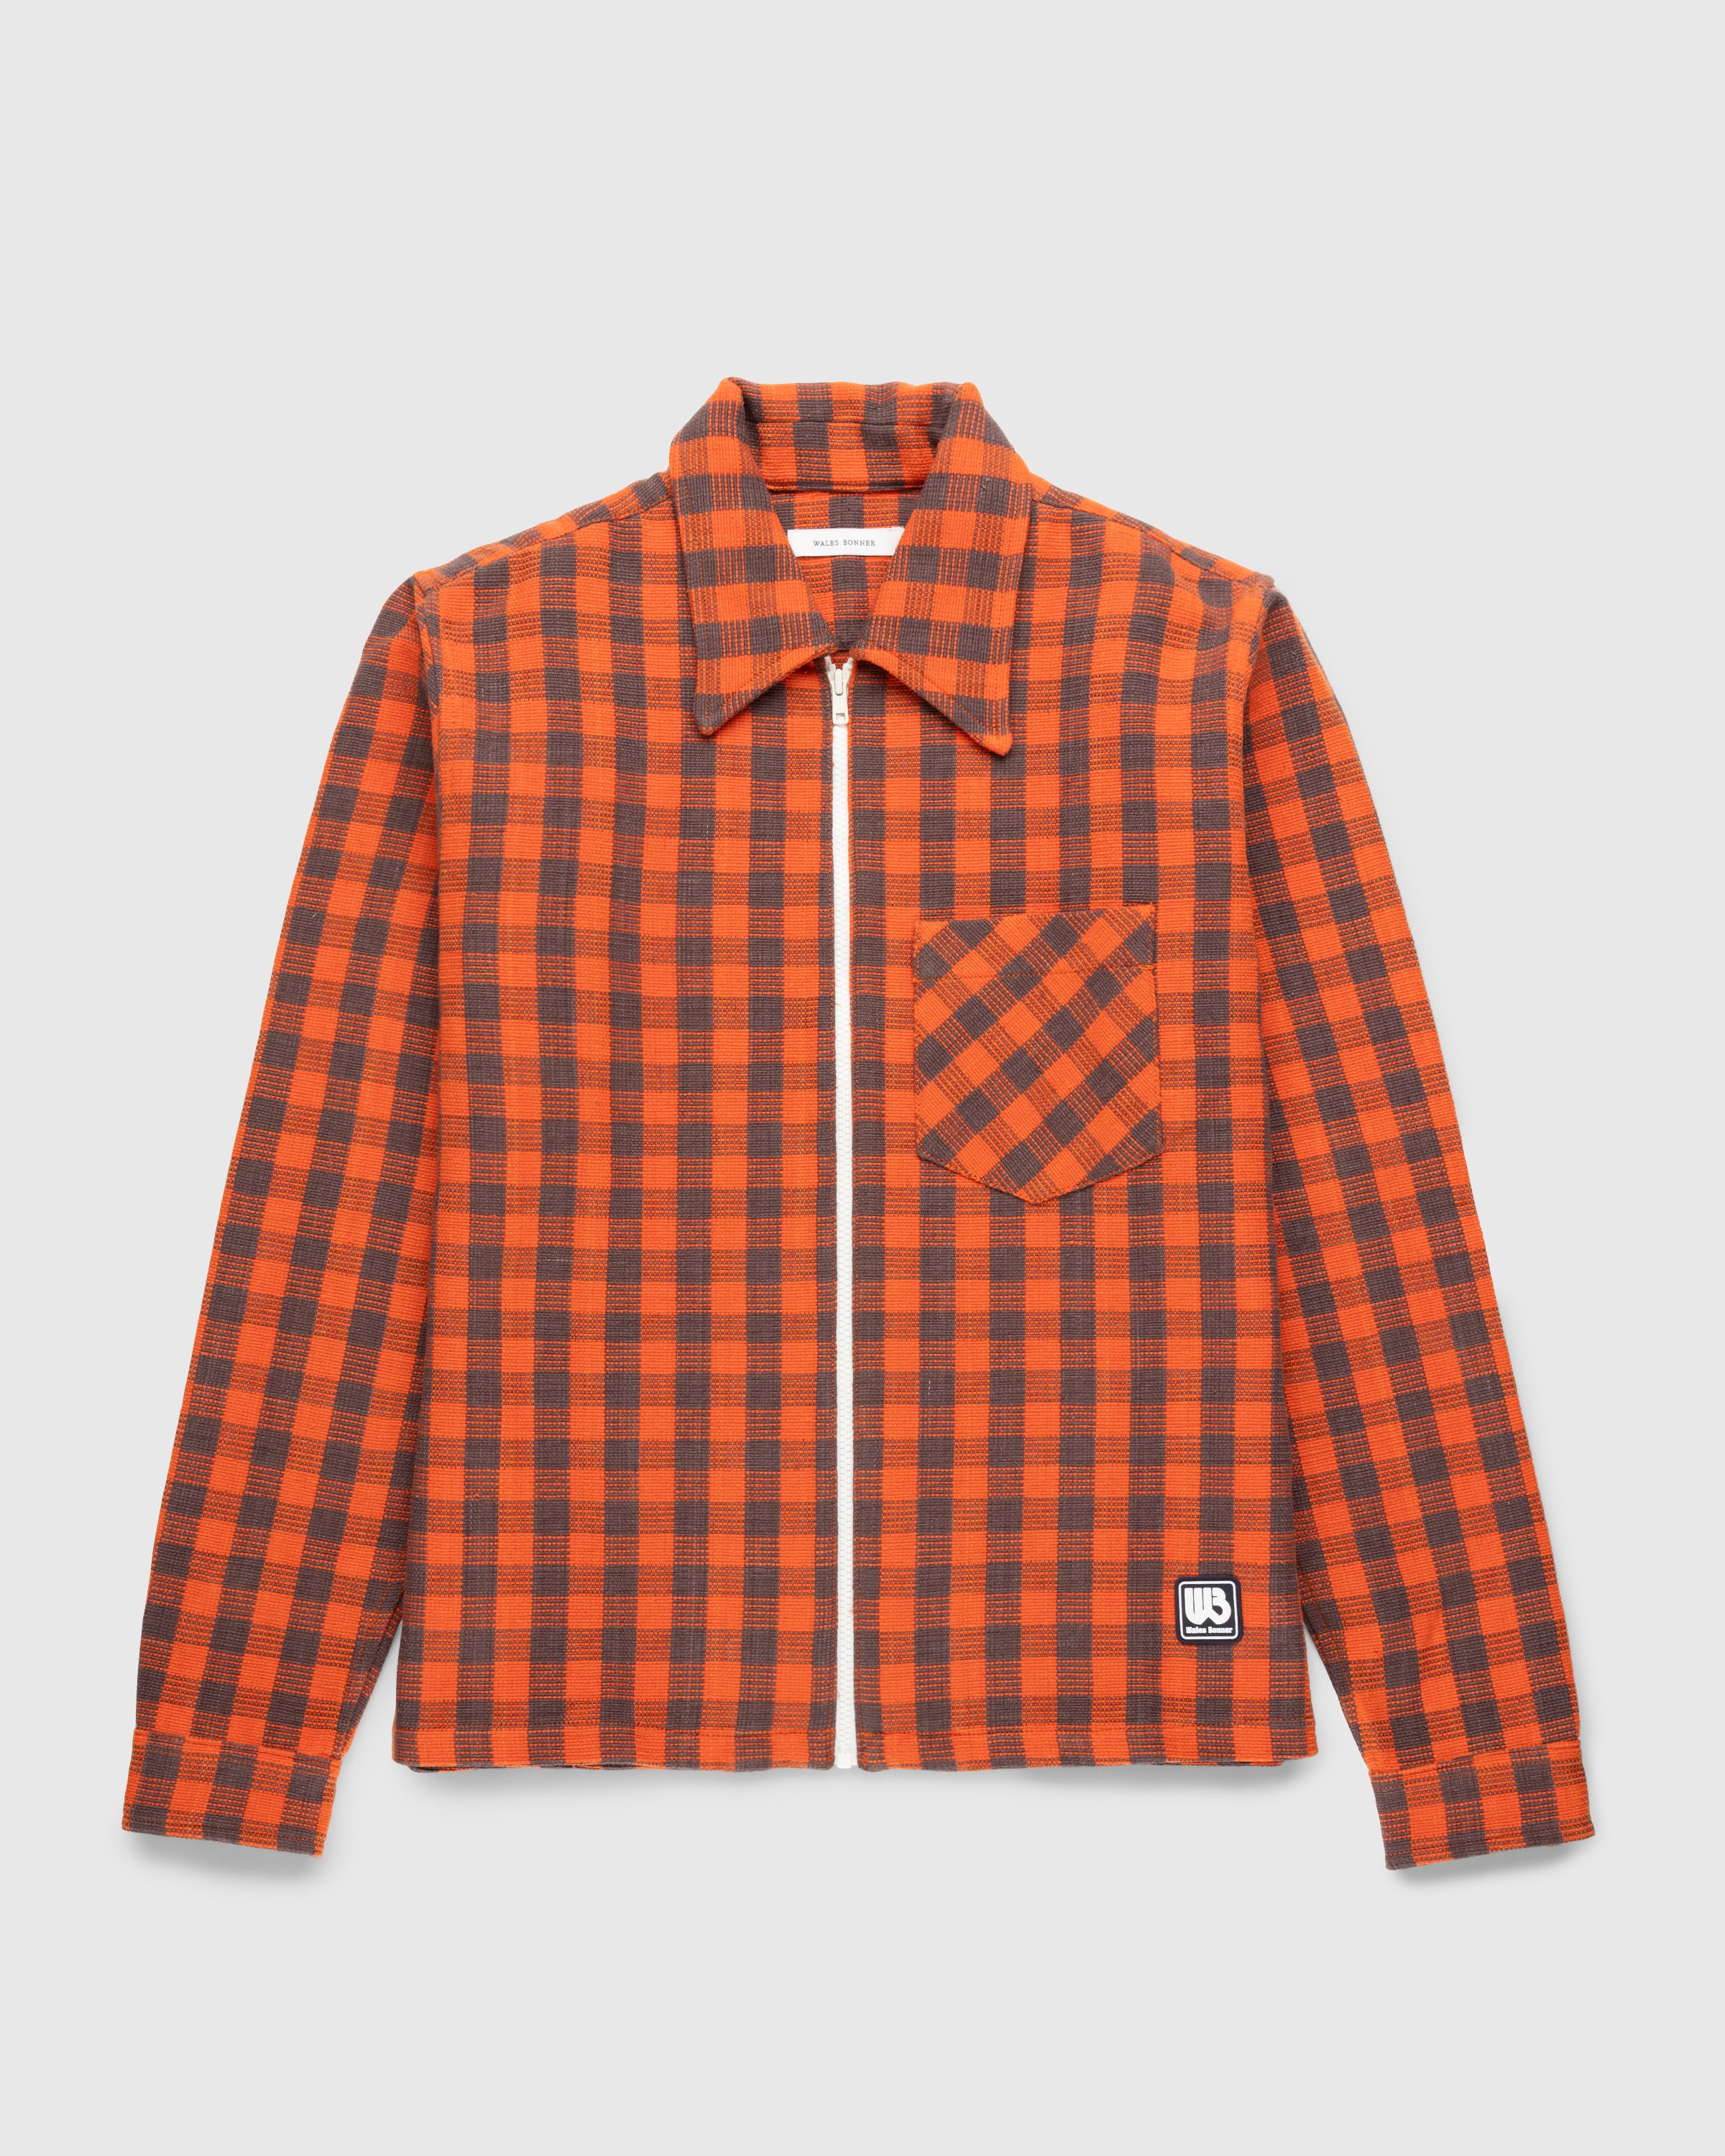 Wales Bonner - Études Jacket Cotton Check Orange/Brown - Clothing - Orange - Image 1